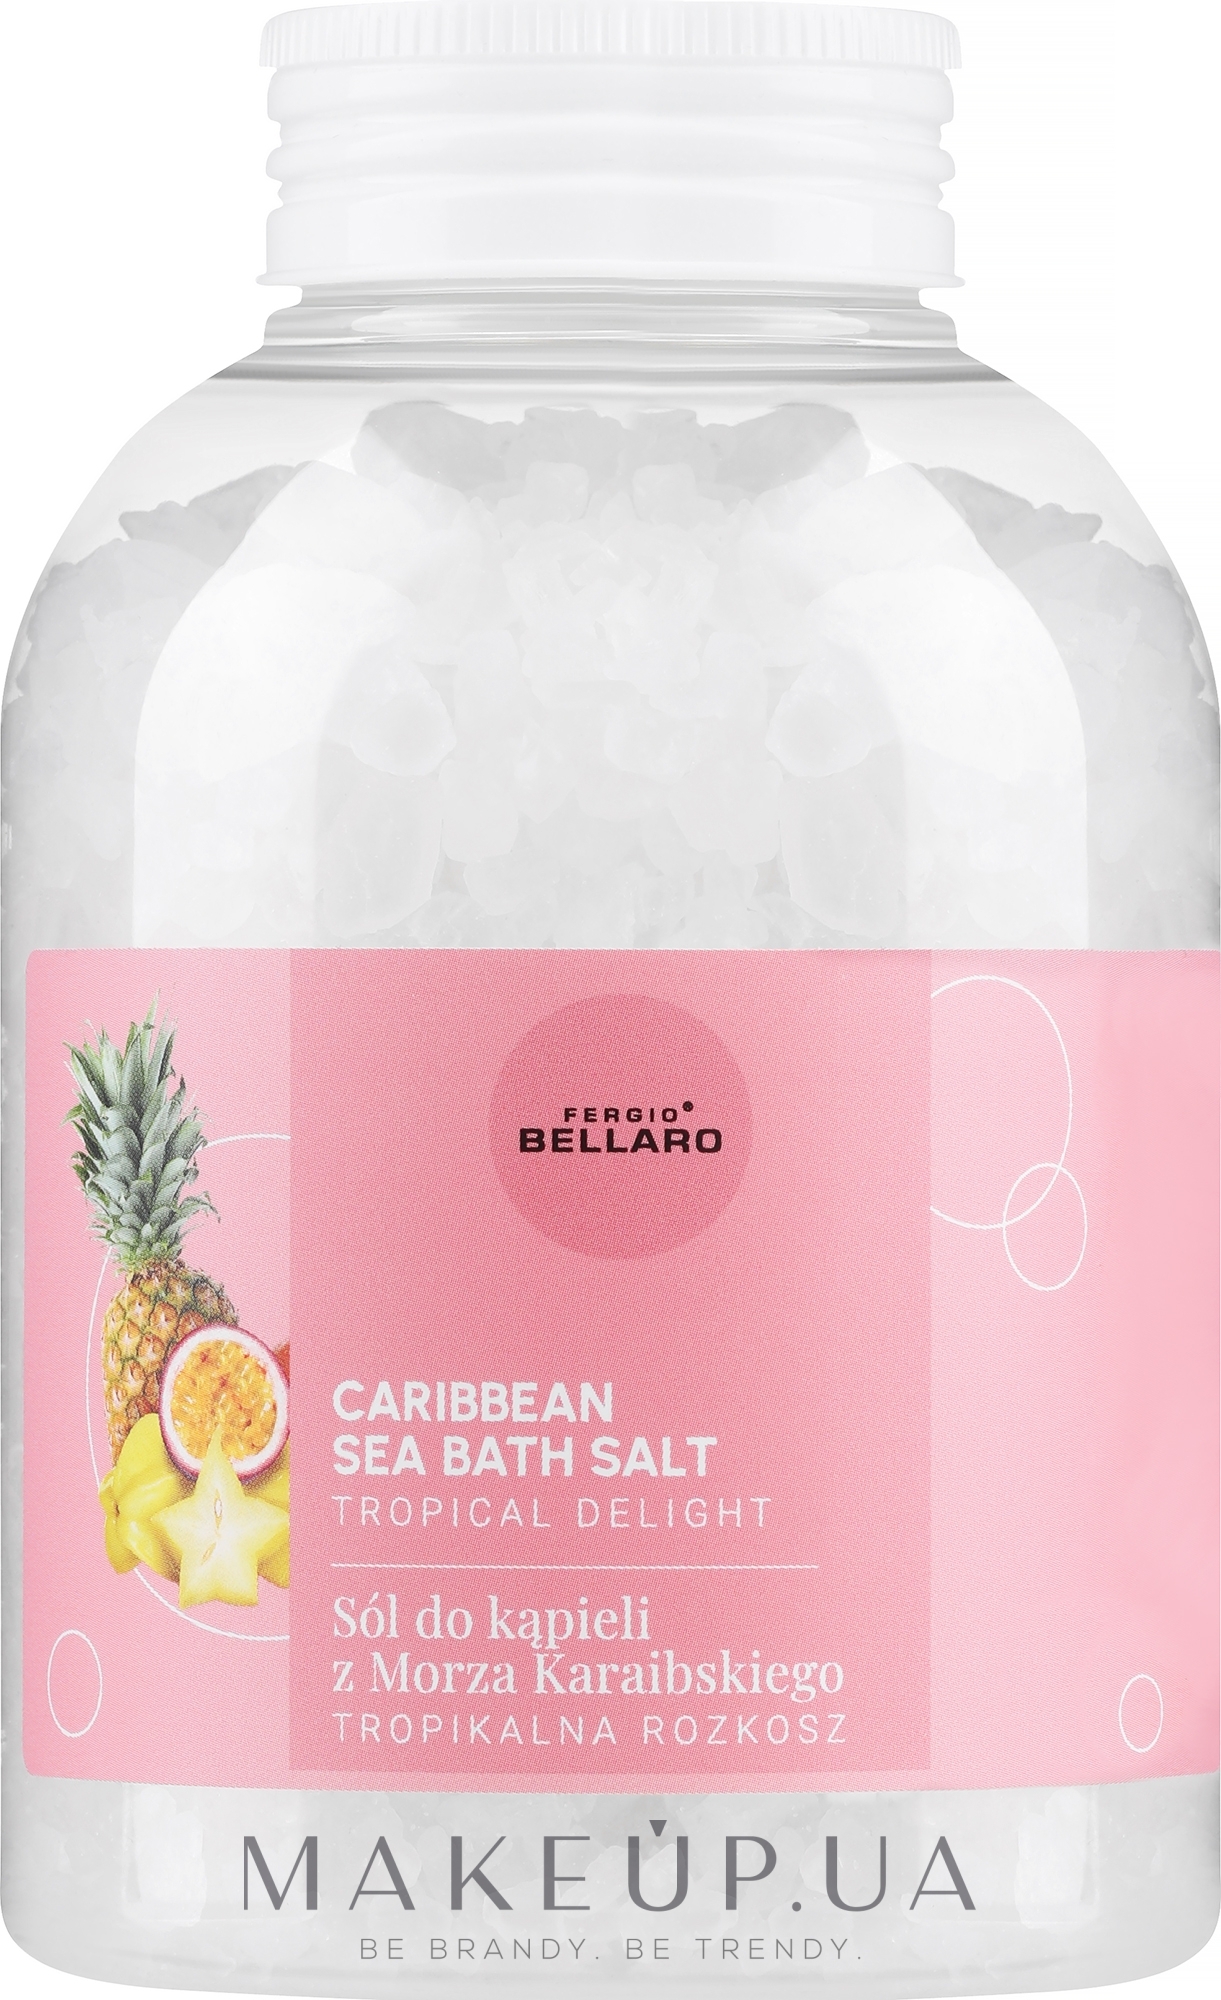 Сіль для ванни "Тропічна насолода" - Fergio Bellaro Caribbean Sea Bath Salt Tropical Delight — фото 600g